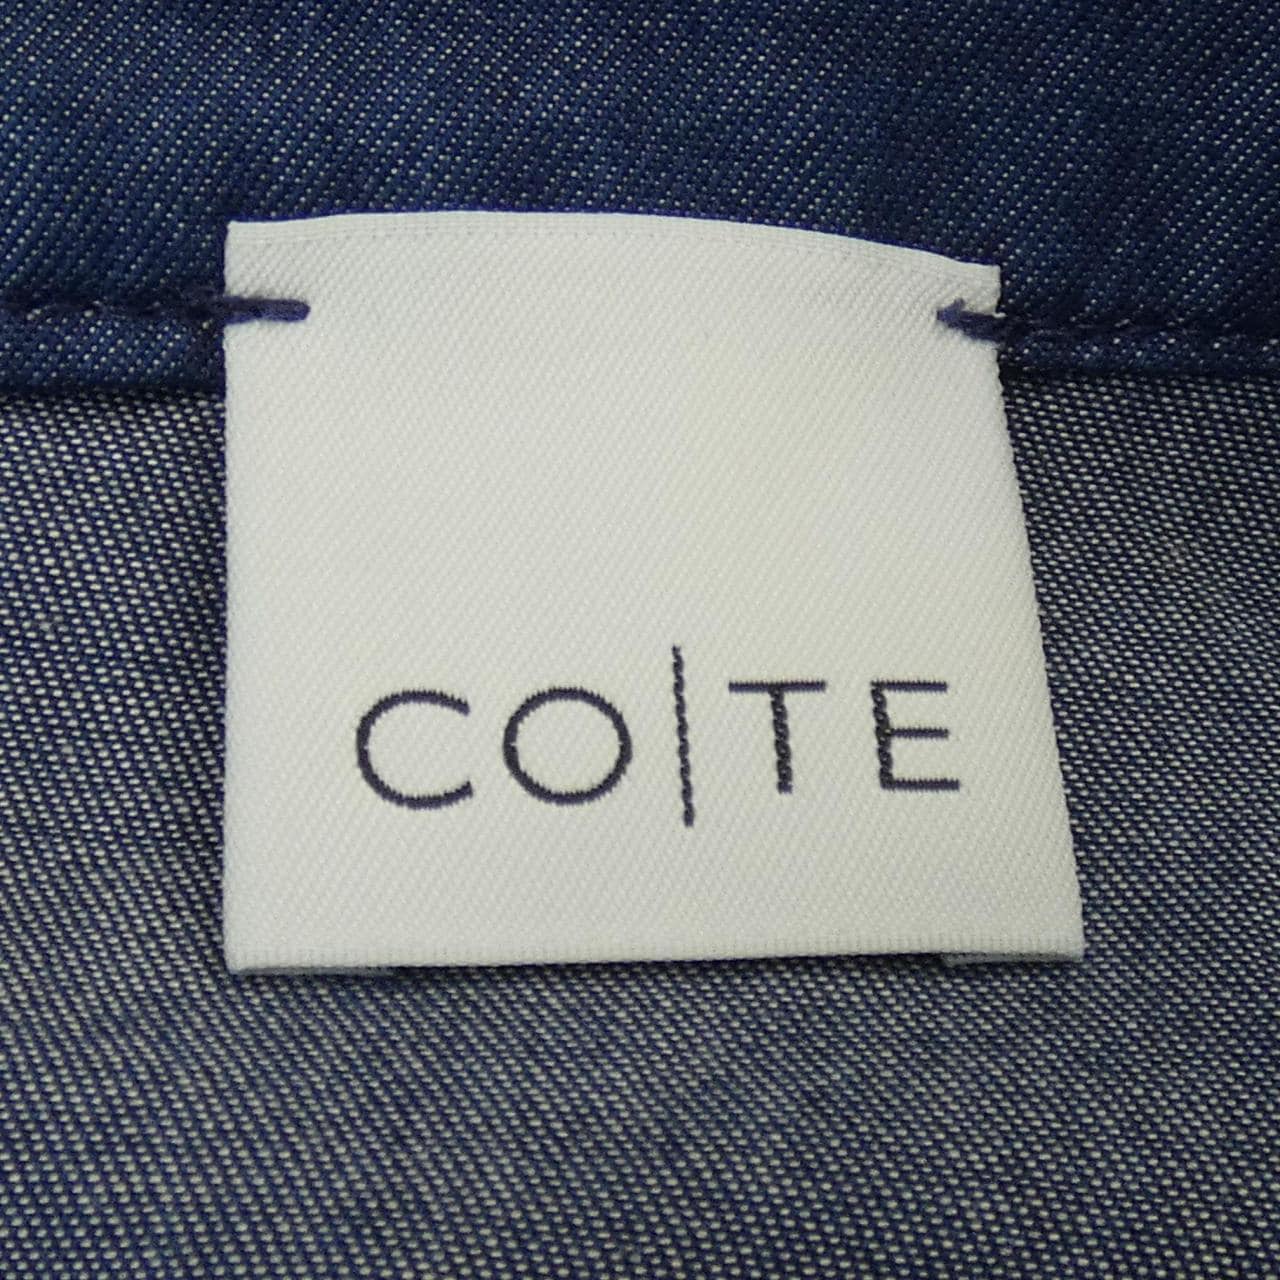 COTE skirt